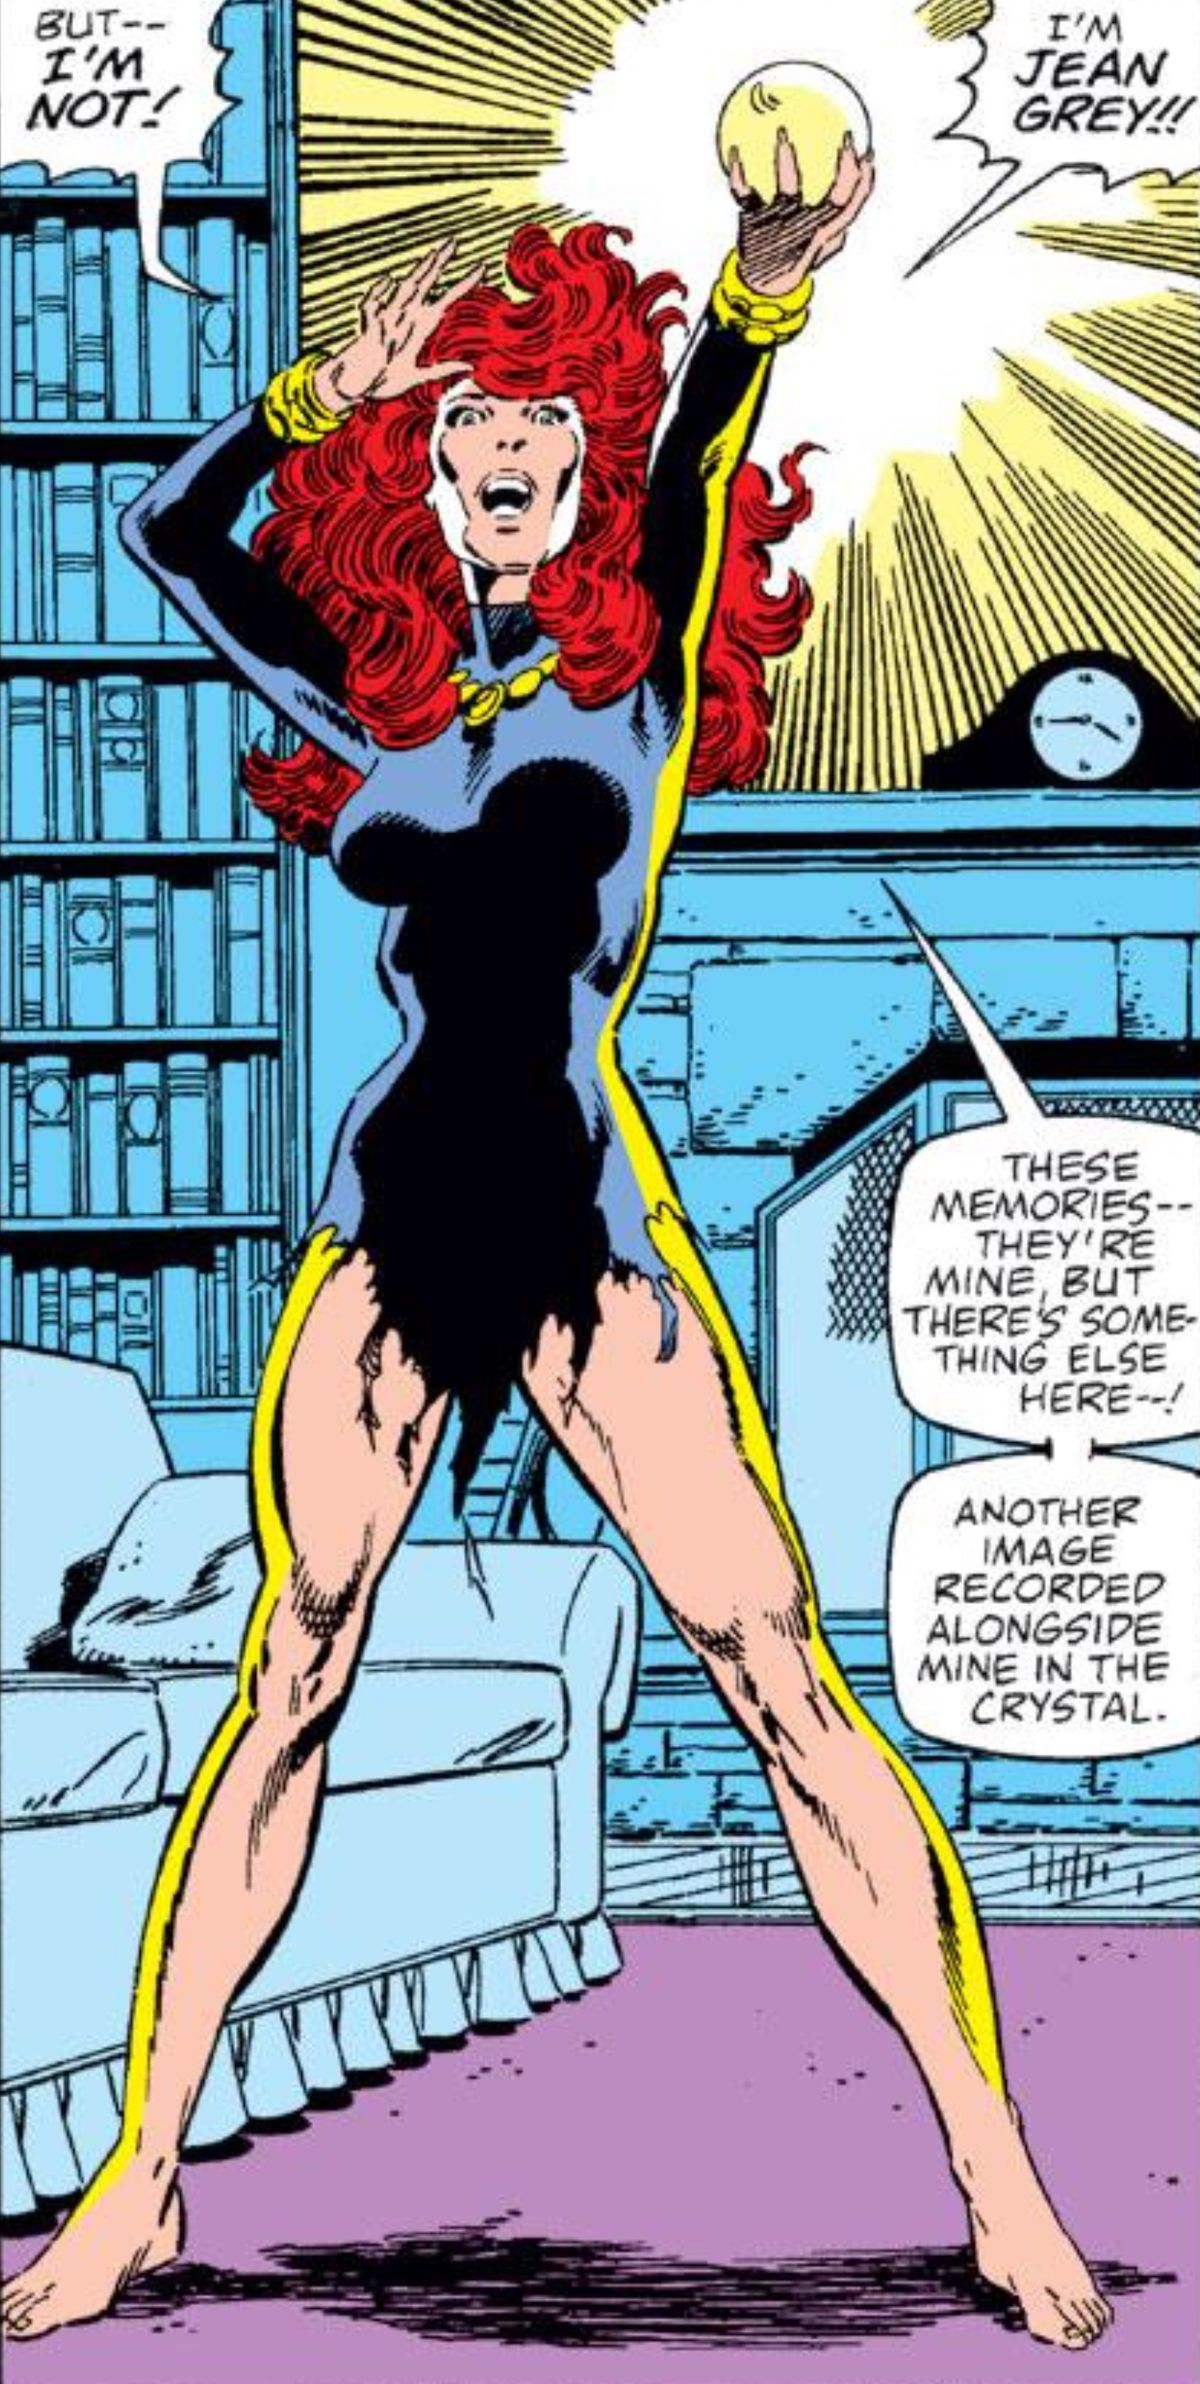 Jean Grey resurrected, in Fantastic Four #286, Marvel Comics, 1986. 